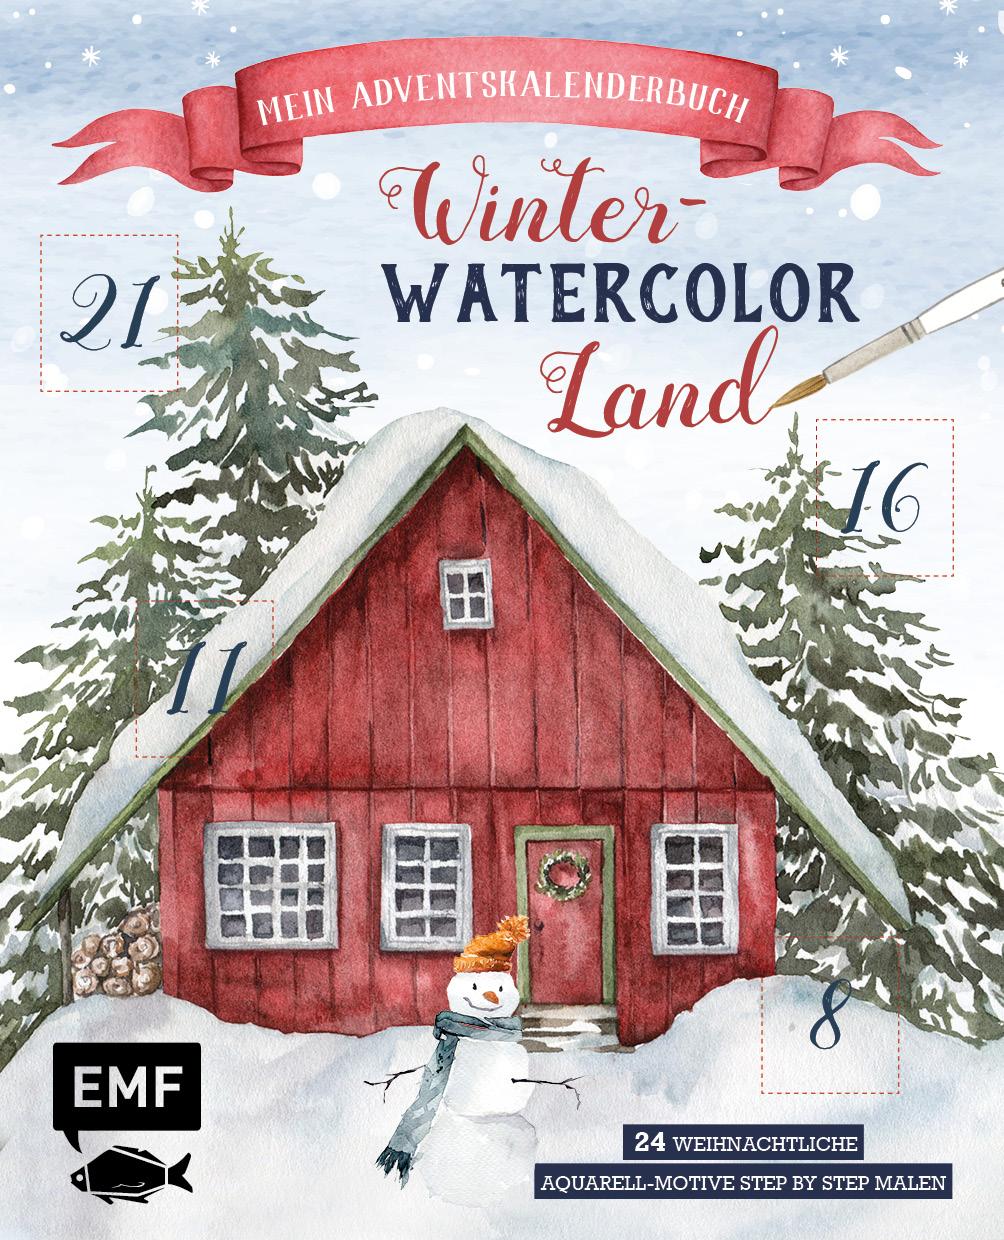 Книга Mein Adventskalender-Buch: Winter-Watercolor-Land 